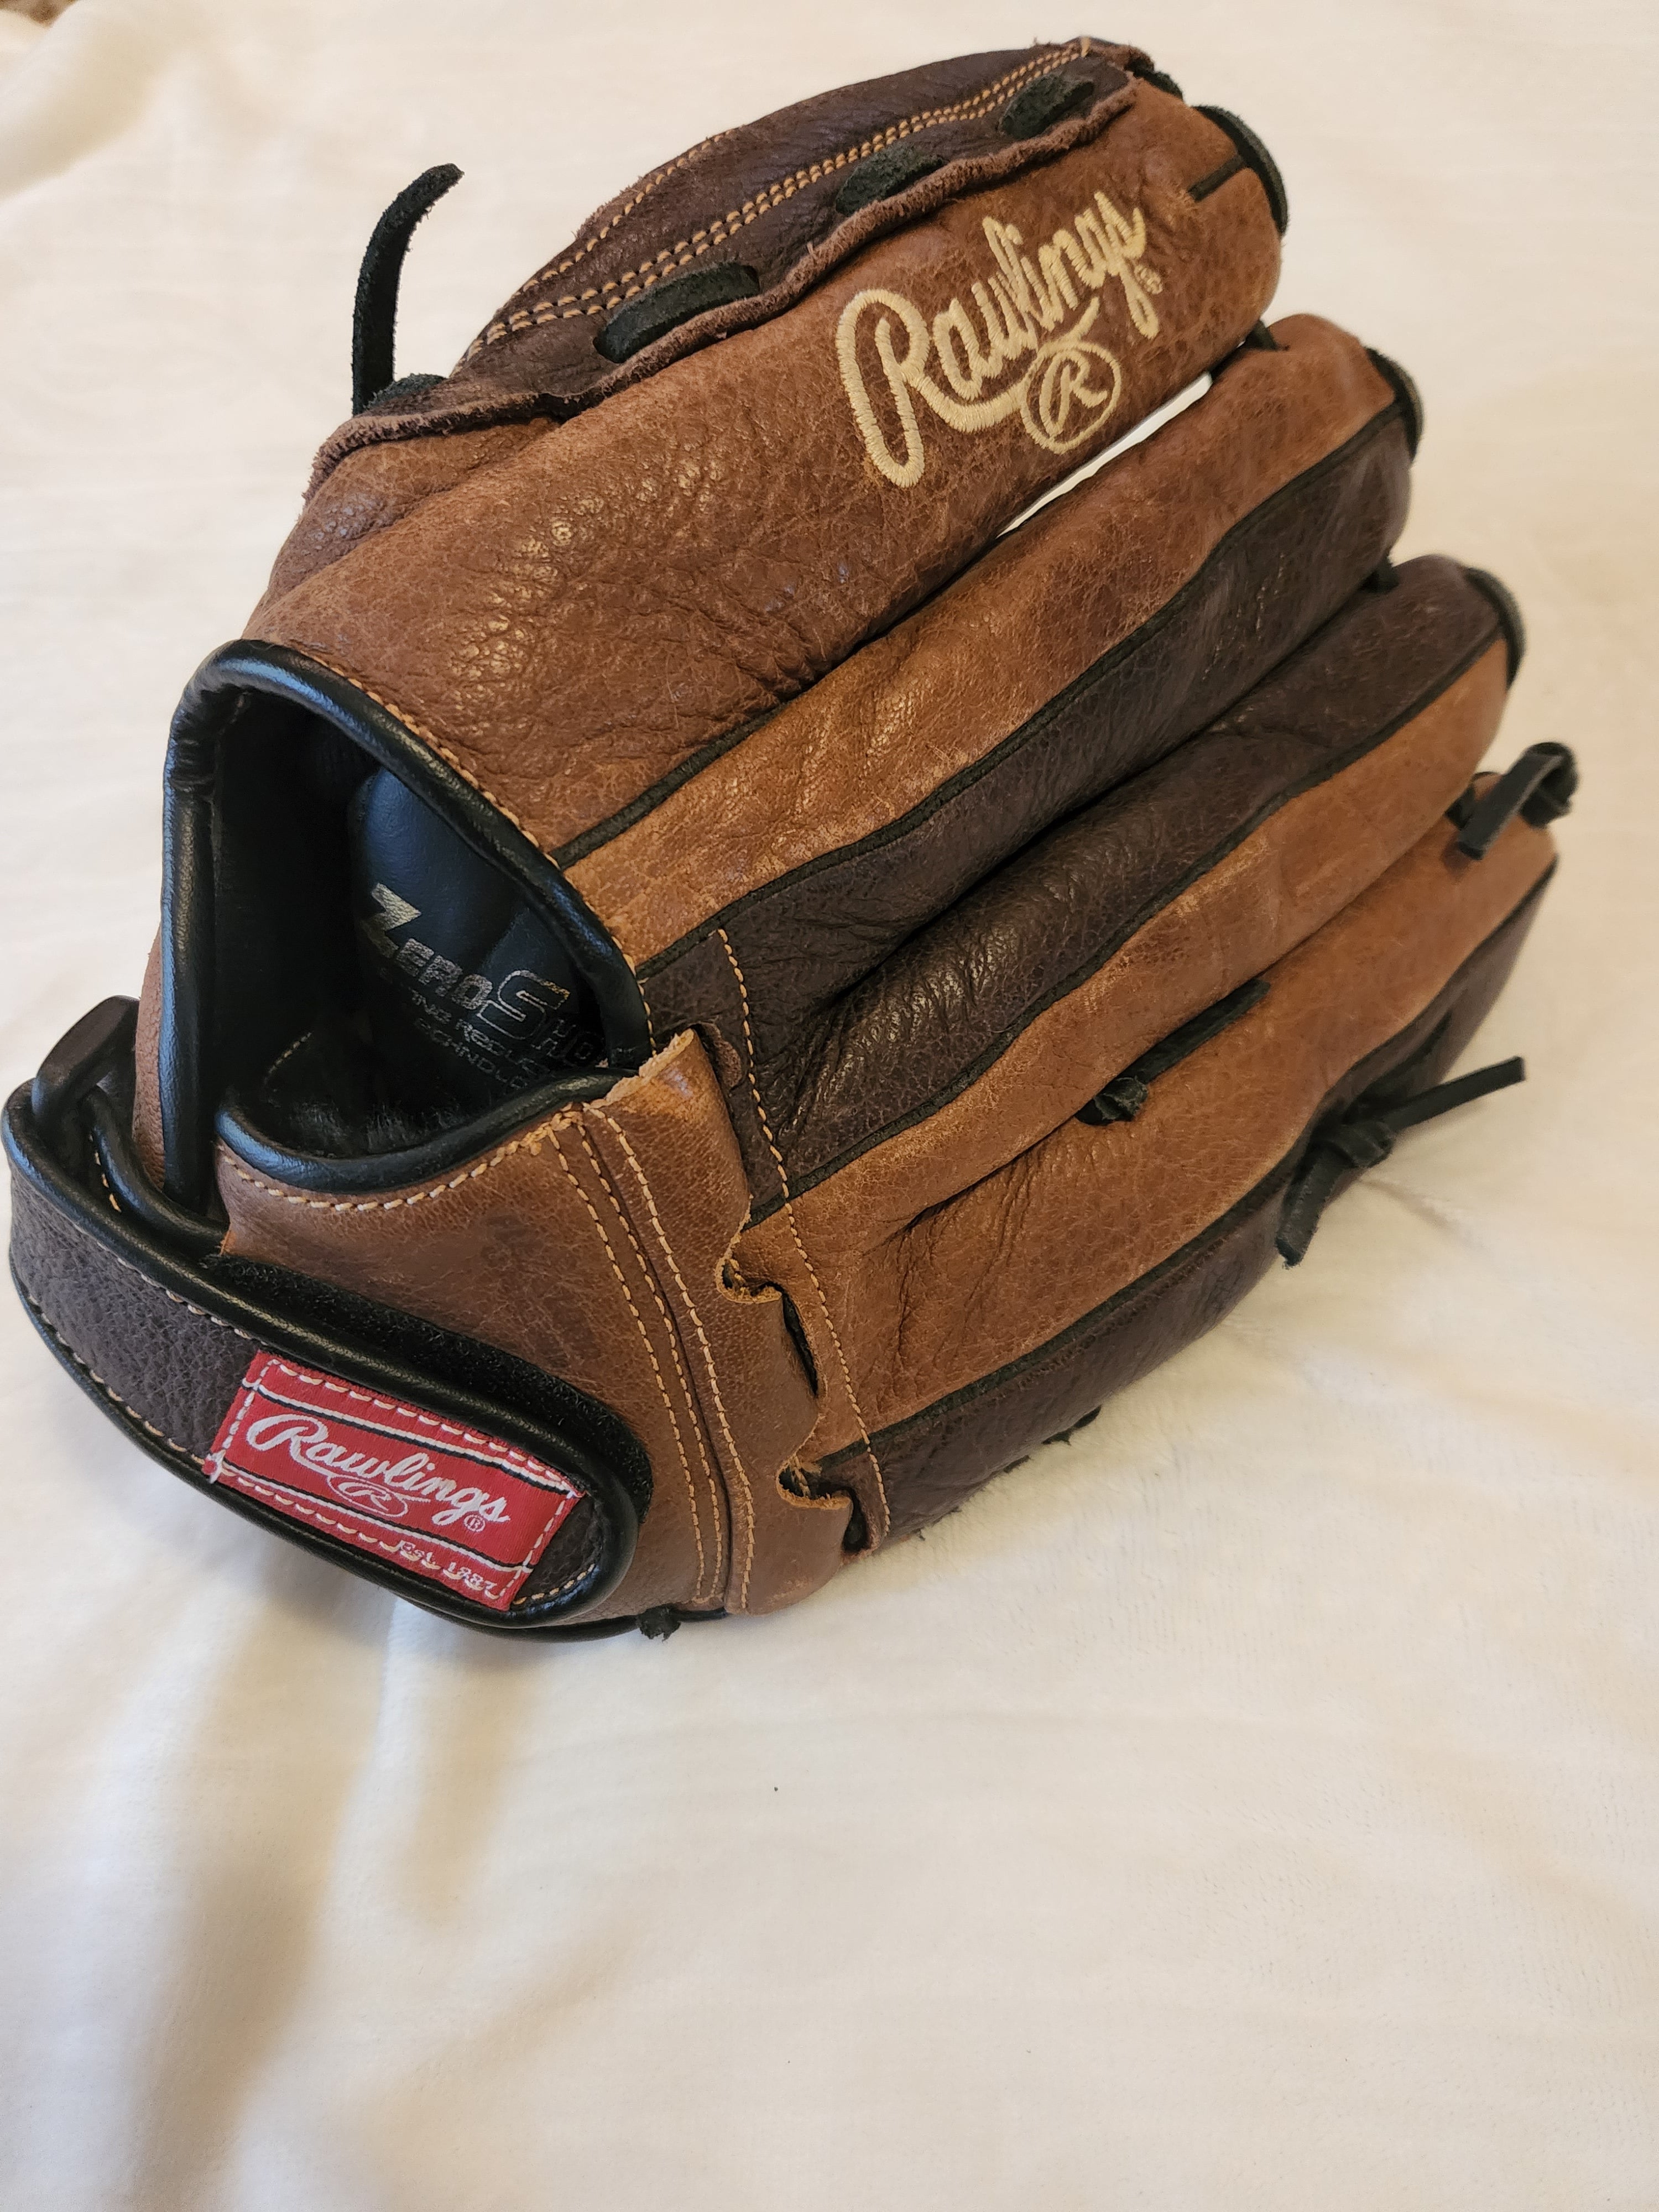 Rawlings RBG36TBR 12.5 inch Baseball Glove for sale online 